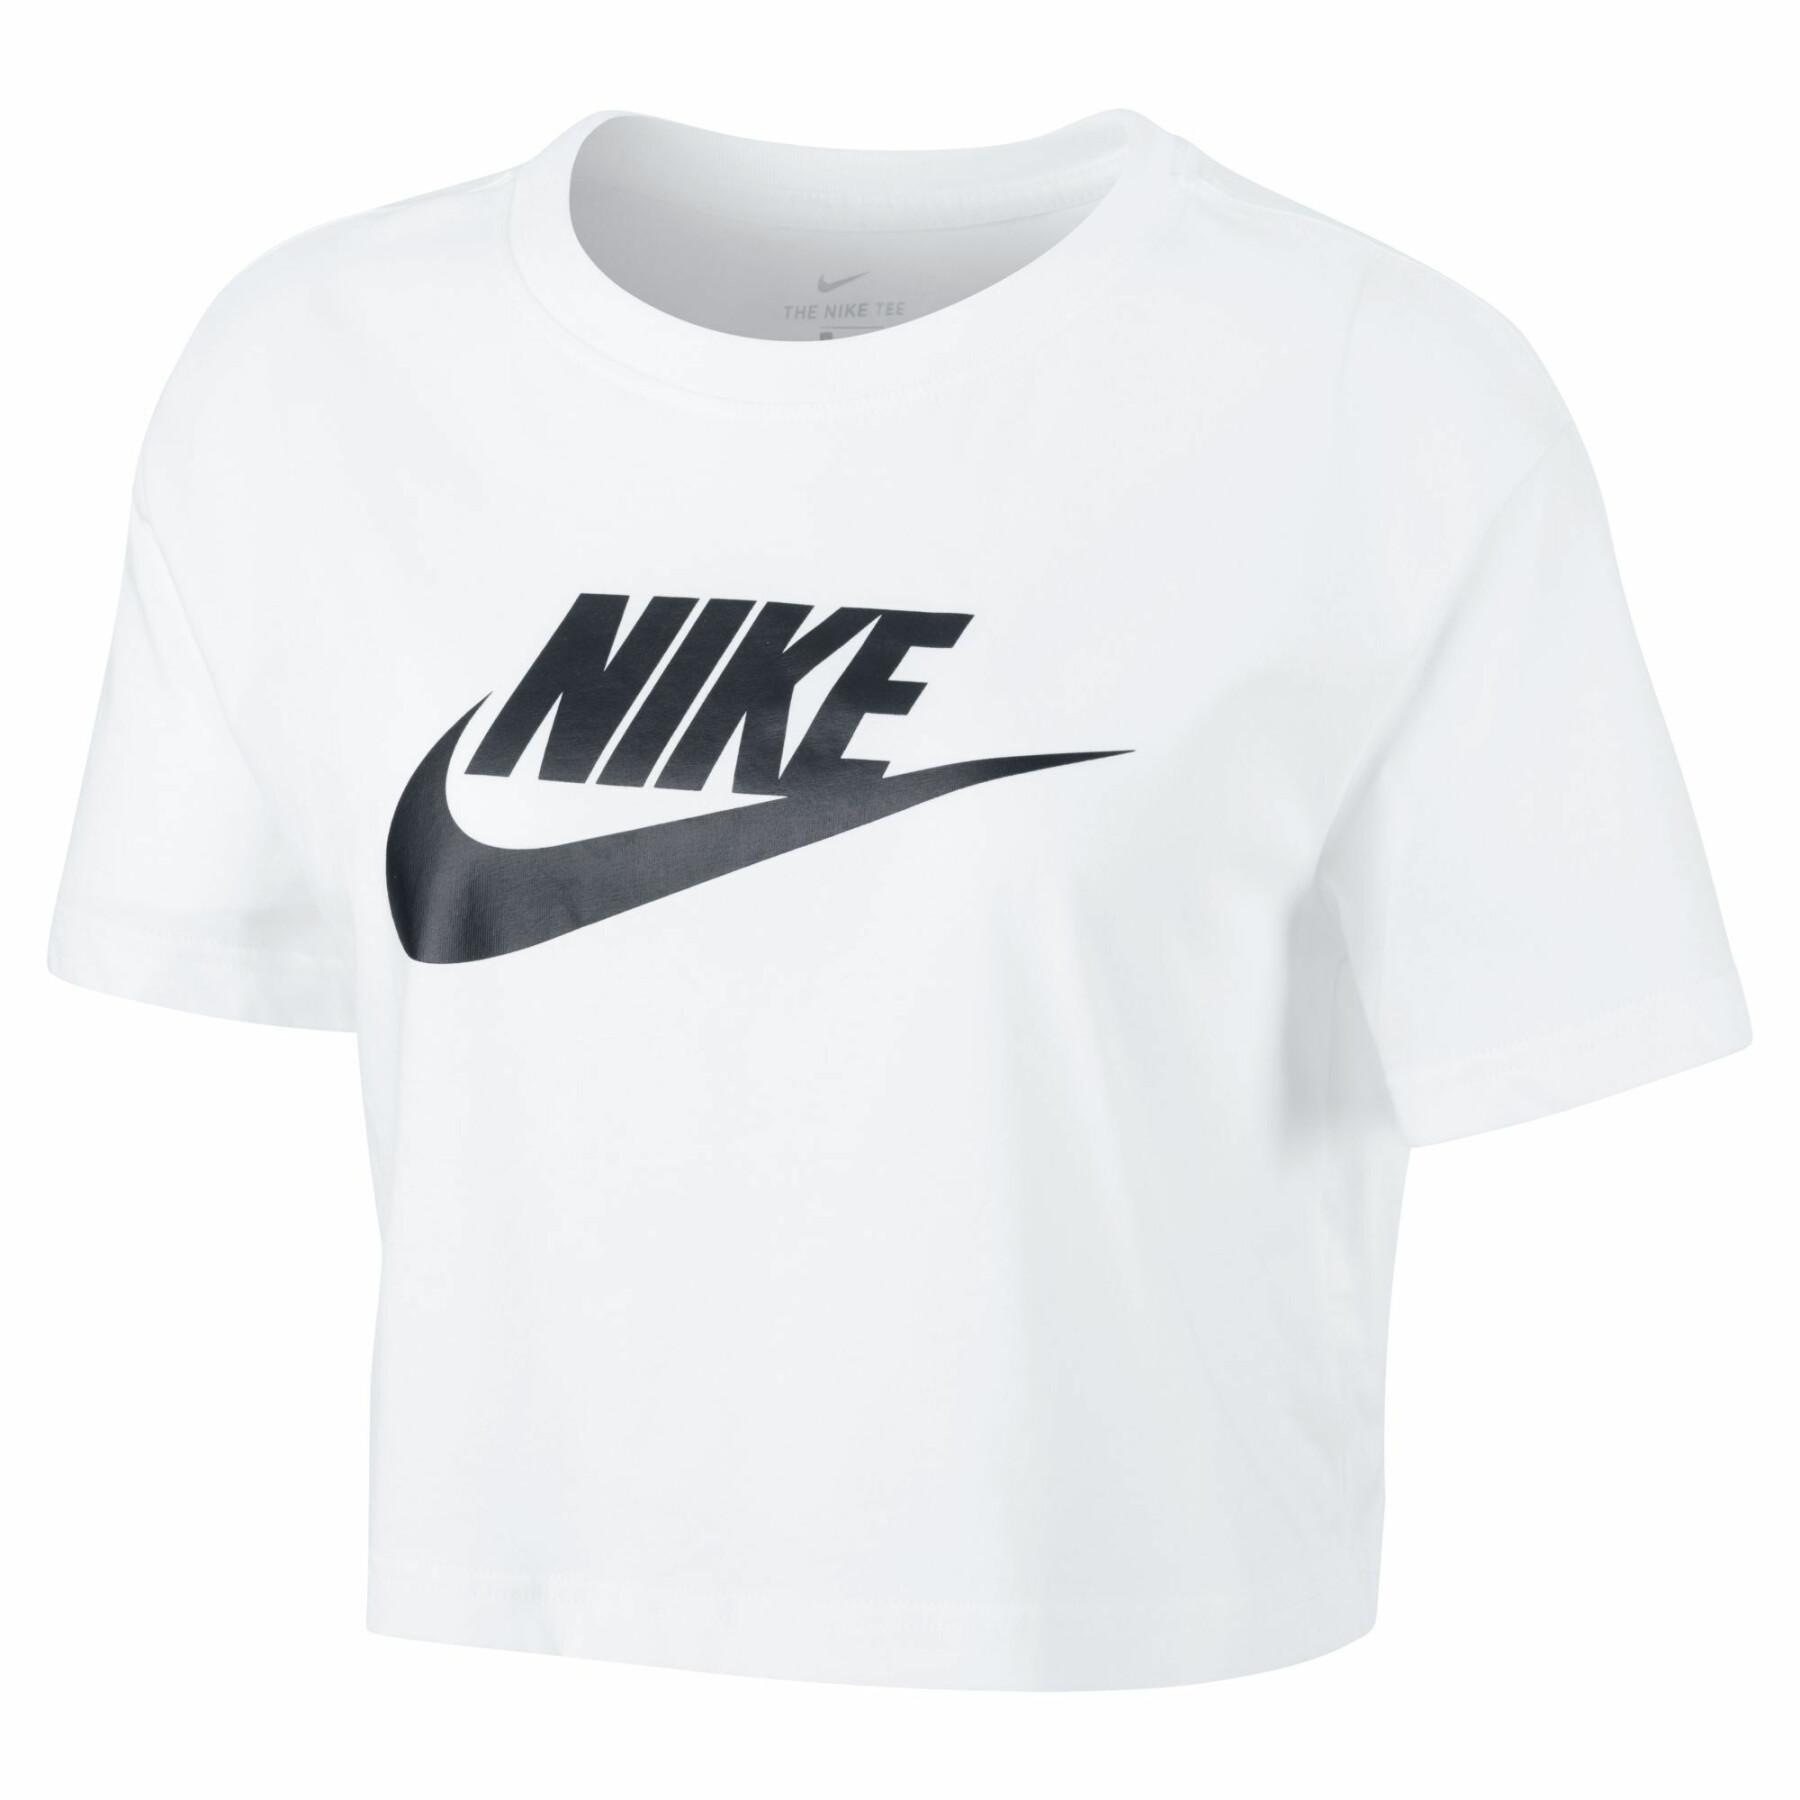 Camiseta crop top de Nike Sportswear Essential - Nike - Marcas - Lifestyle